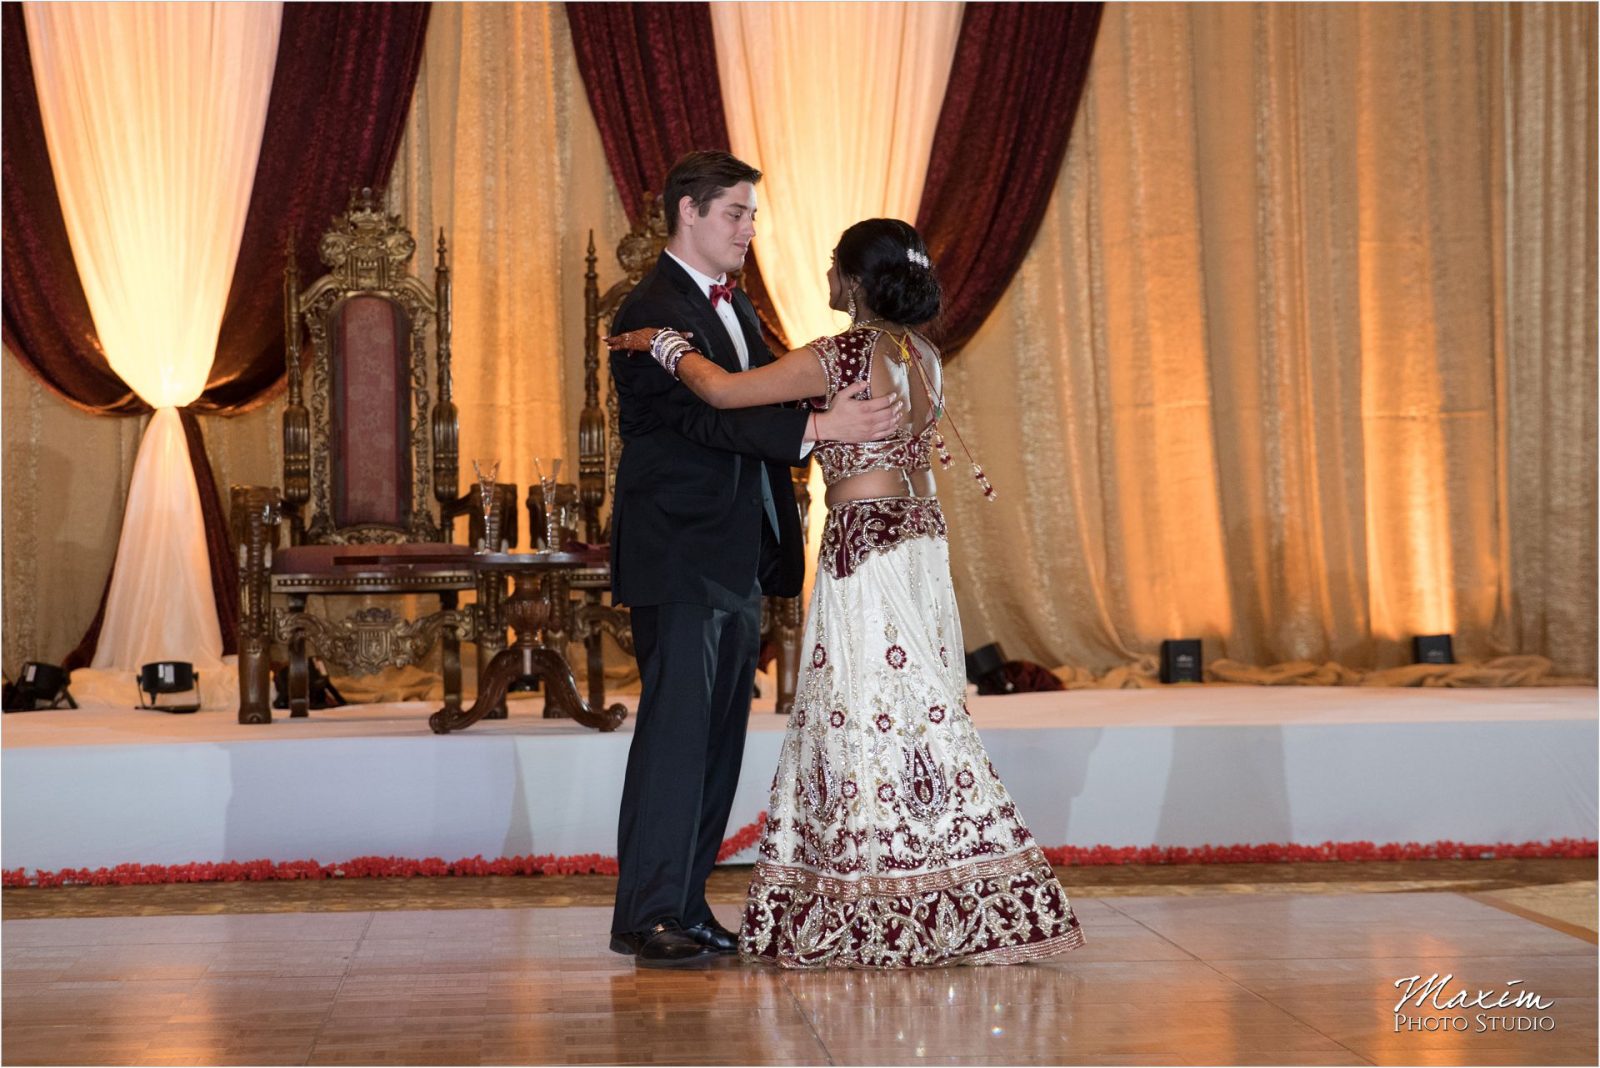 Savannah Center Indian Wedding reception